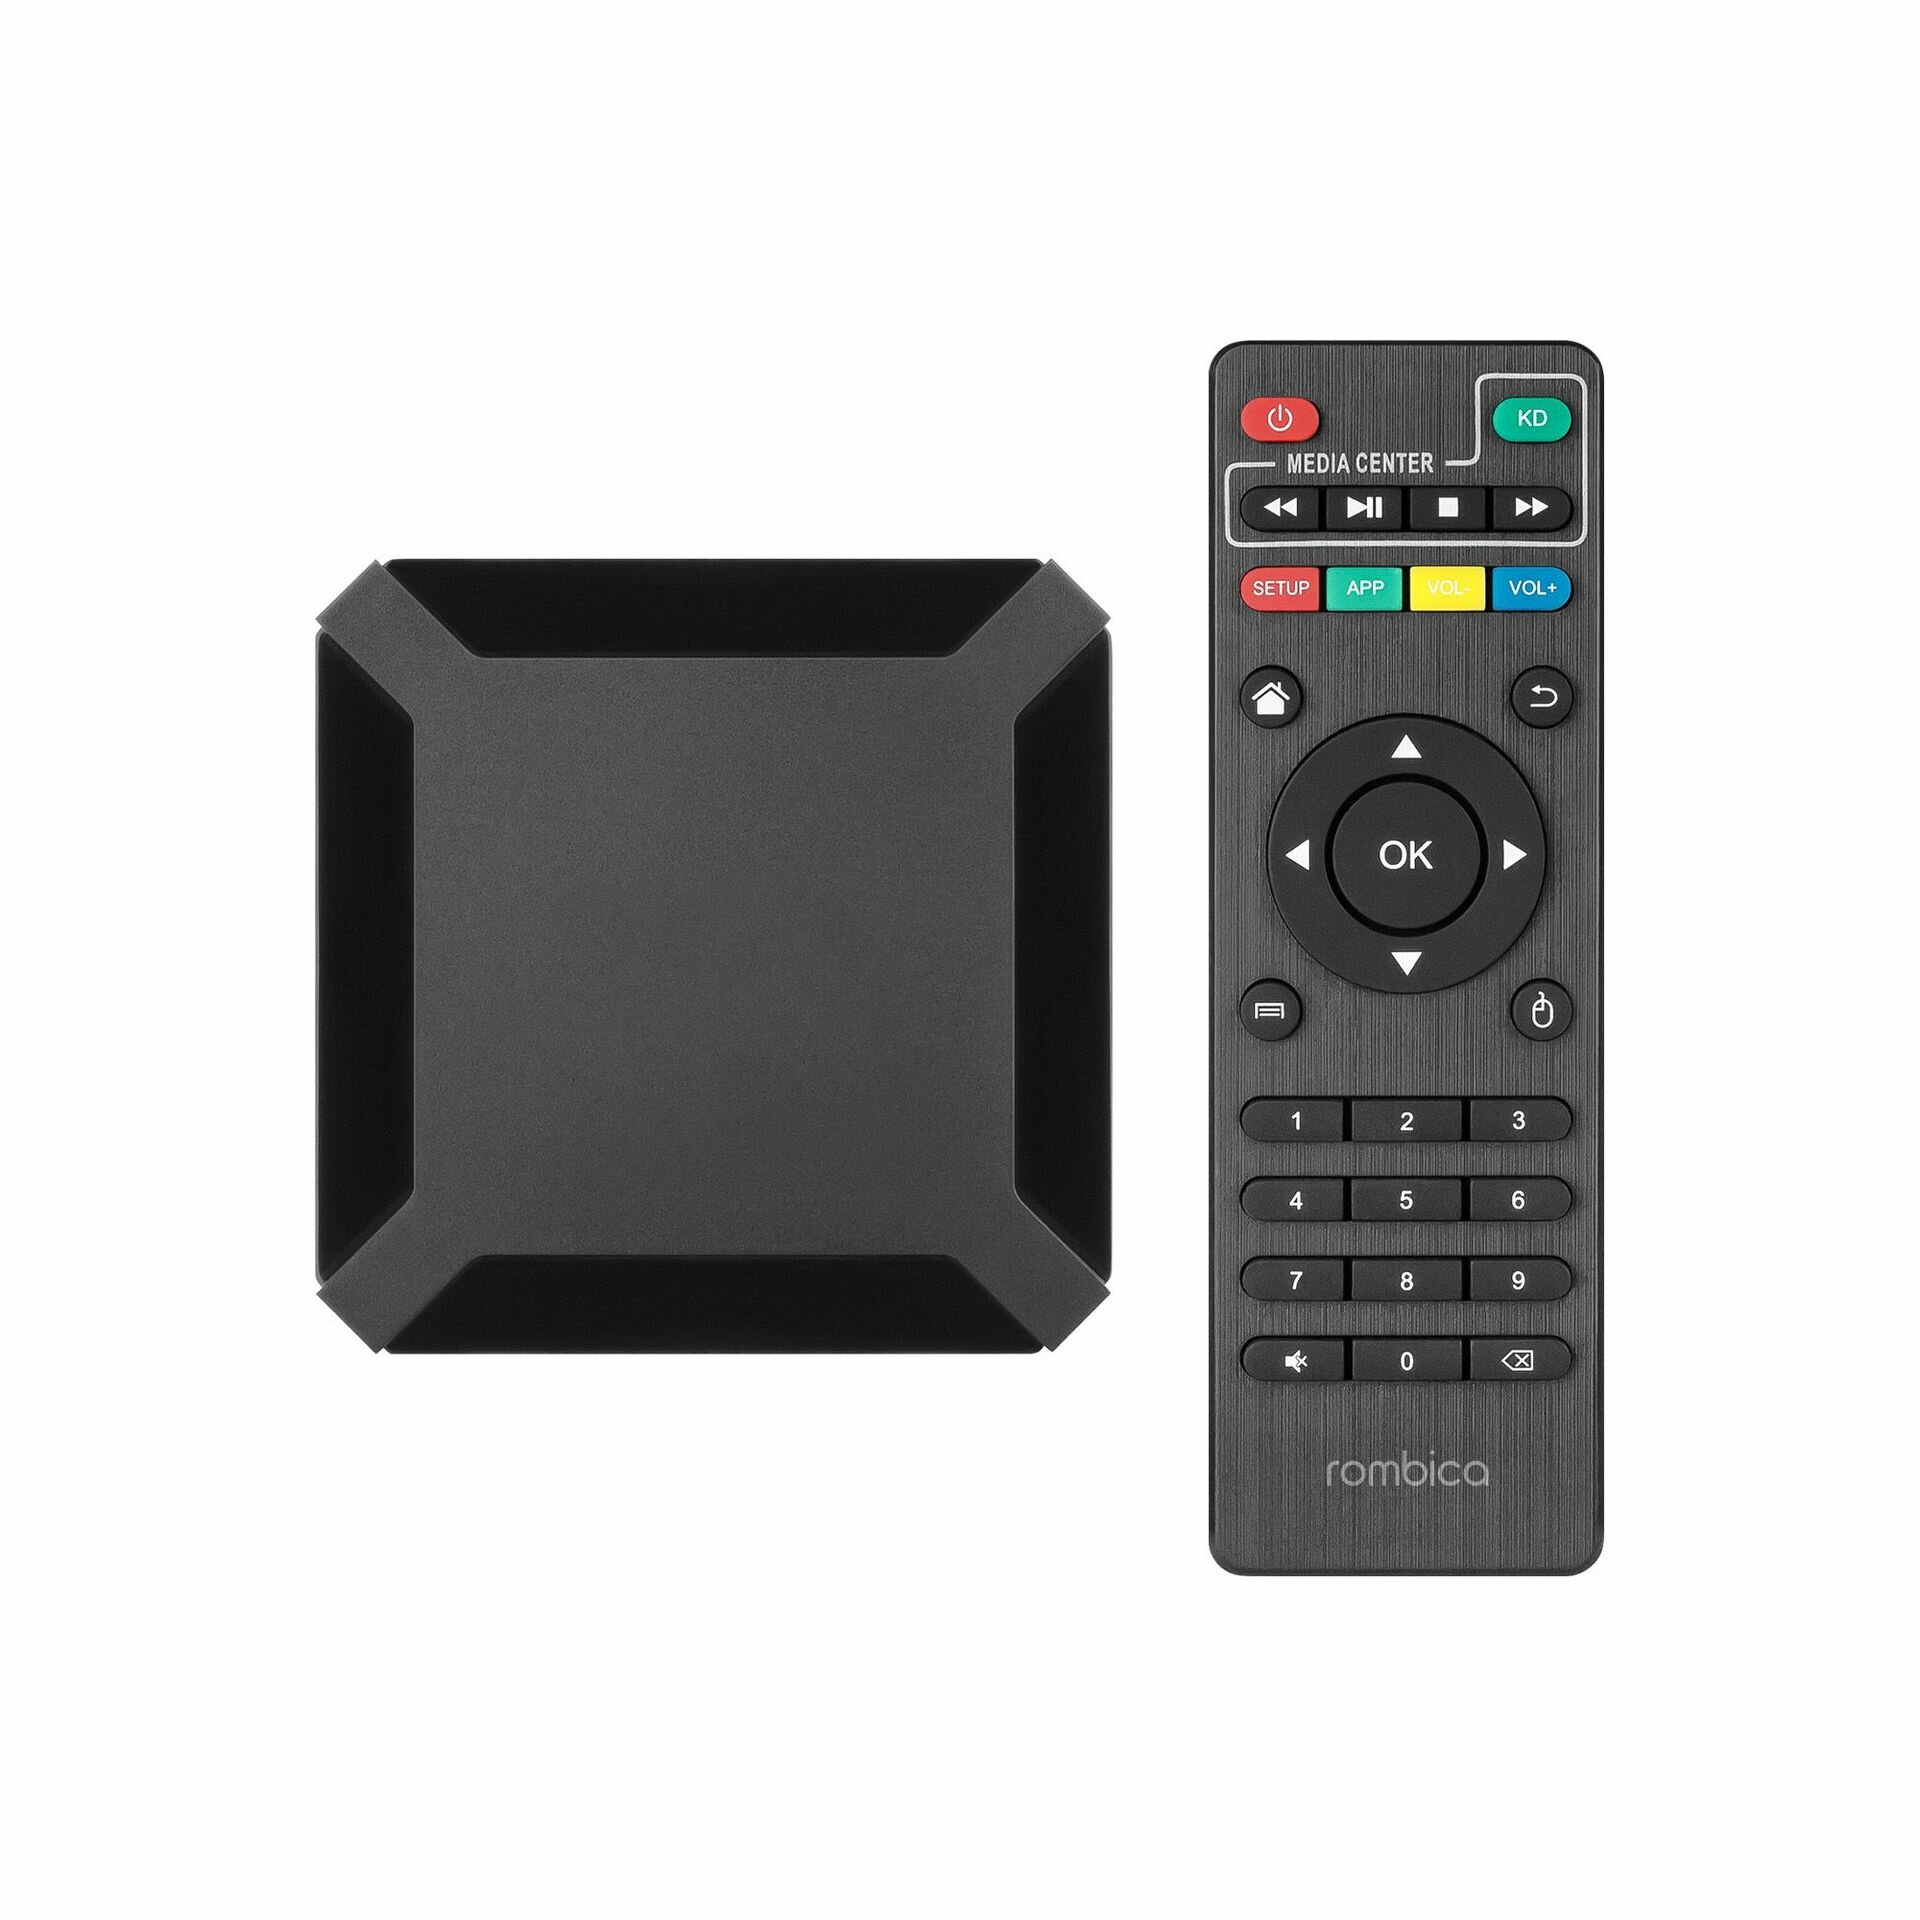 Smart-TV приставка Rombica Smart Box G3